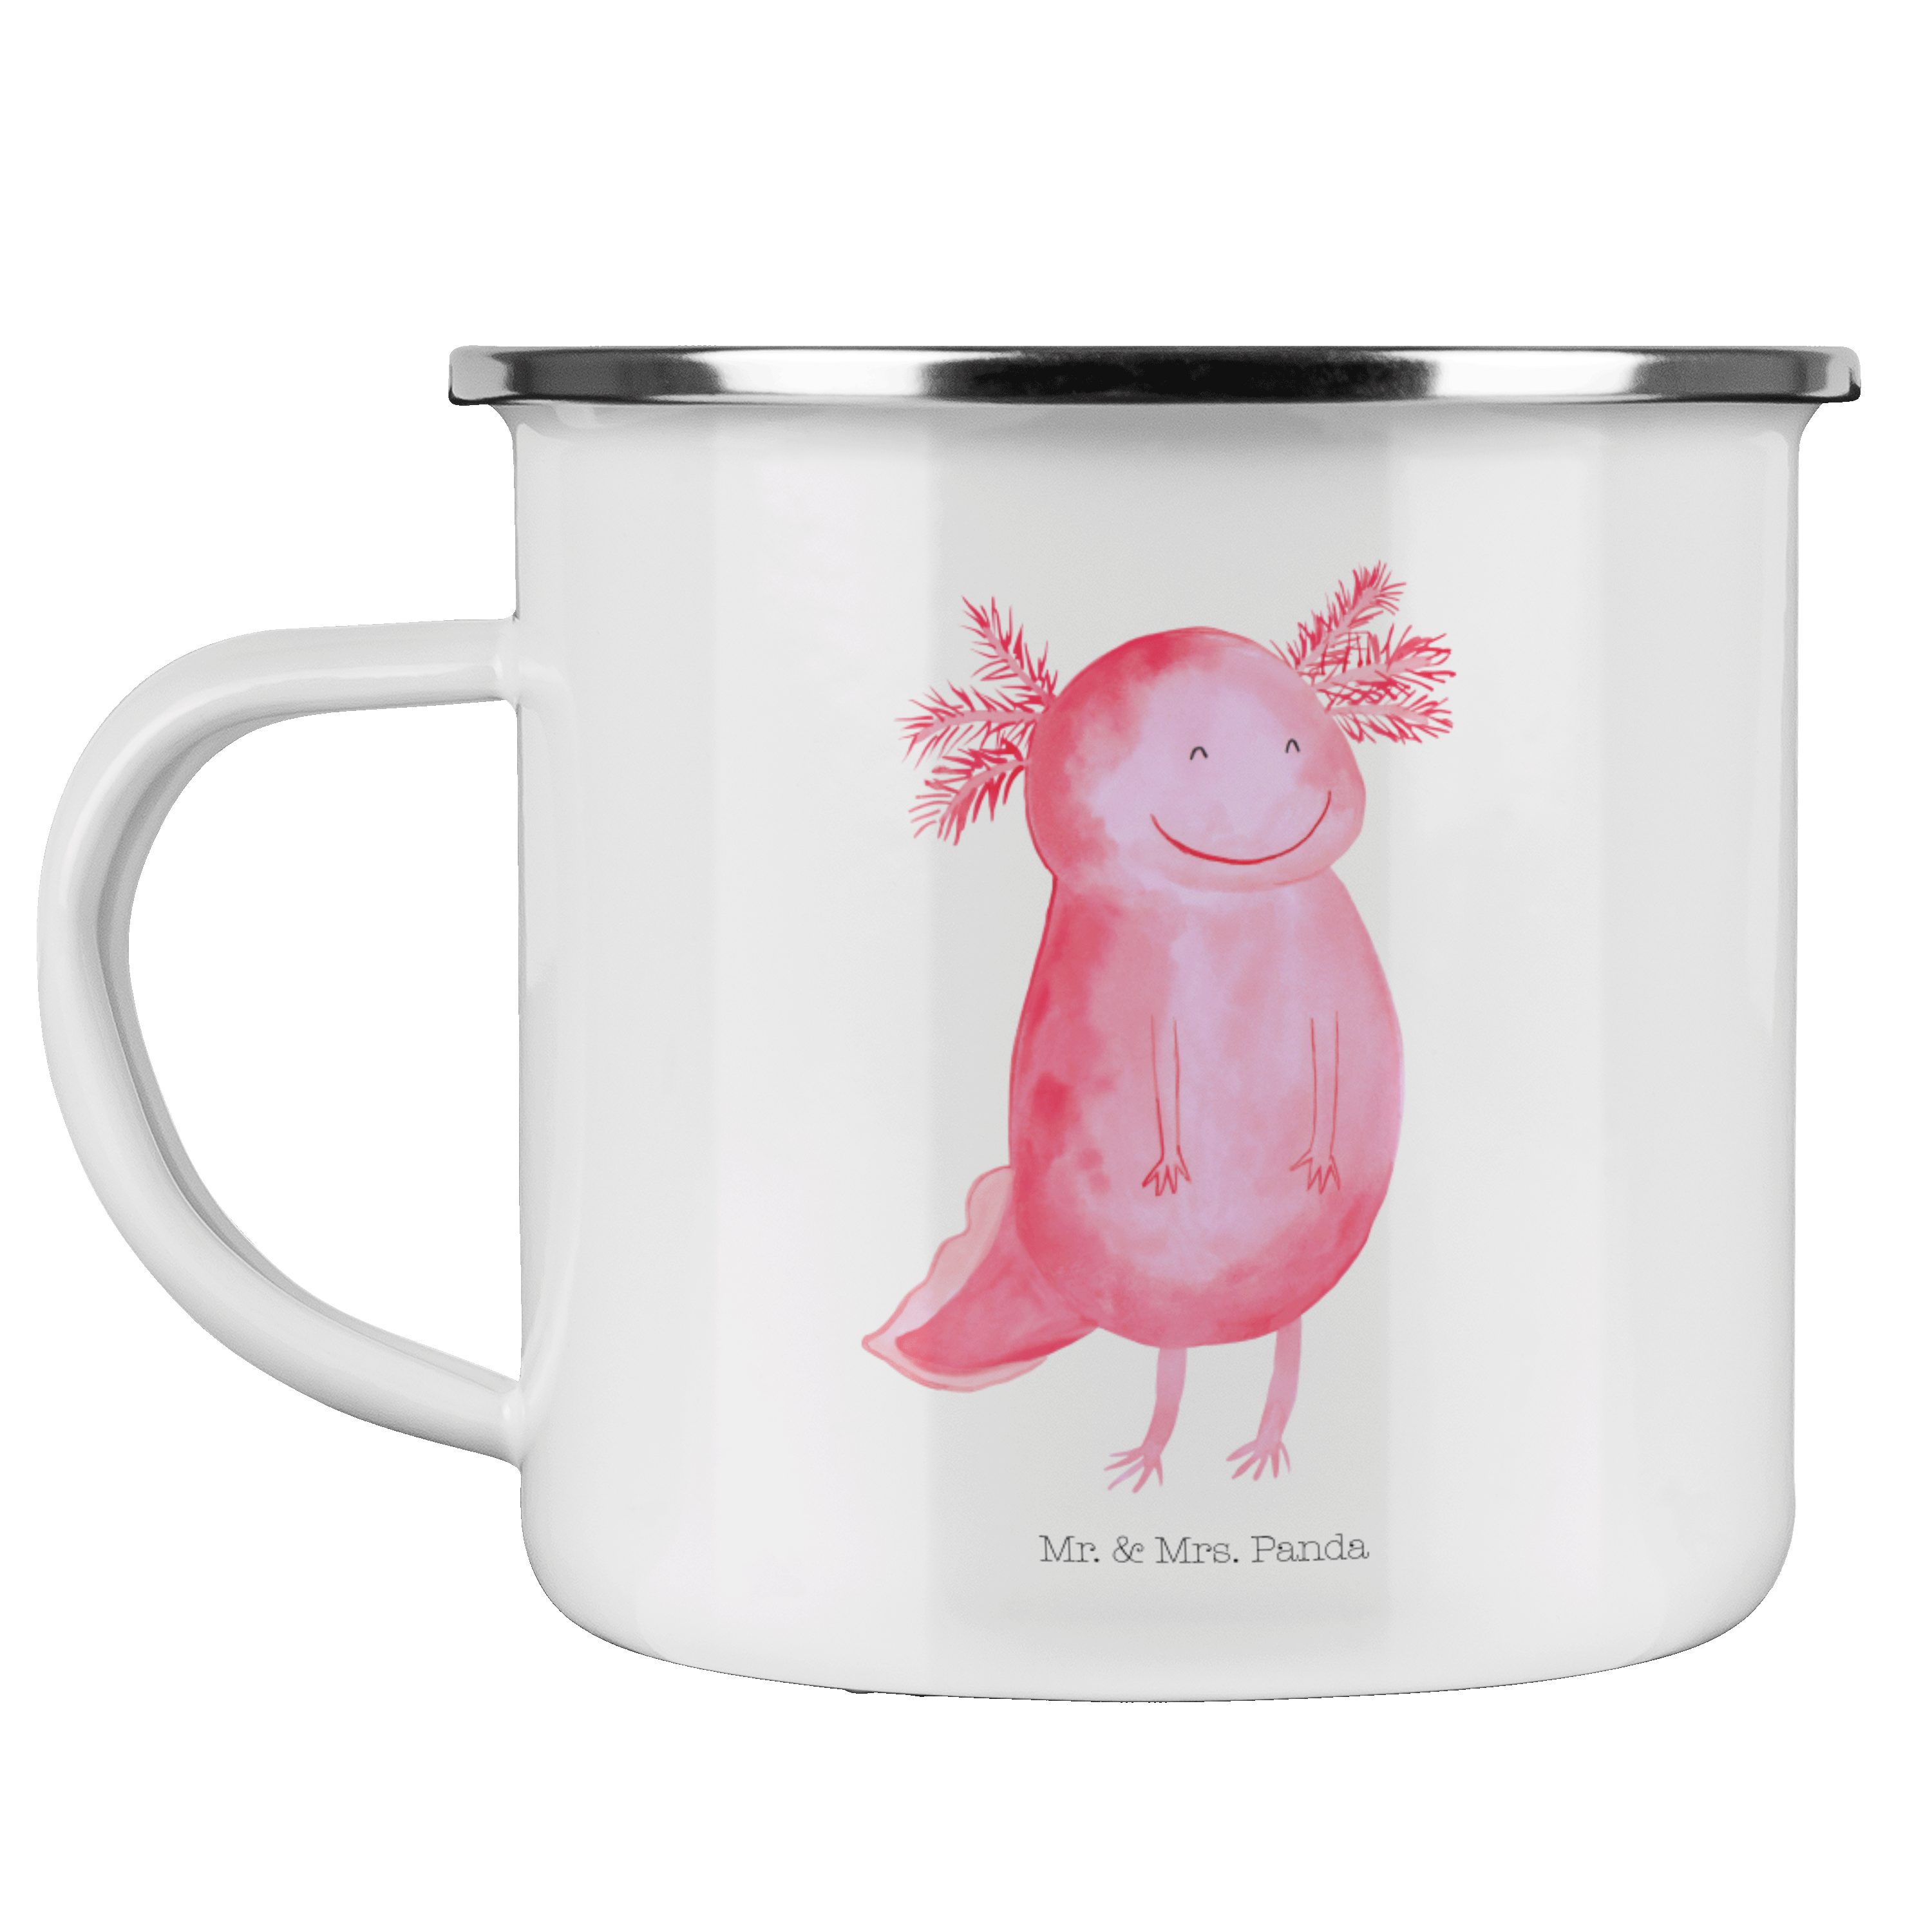 Mr. & Mrs. Panda Becher Axolotl glücklich - Weiß - Geschenk, lebensfroh, Schwanzlurch, Campin, Emaille